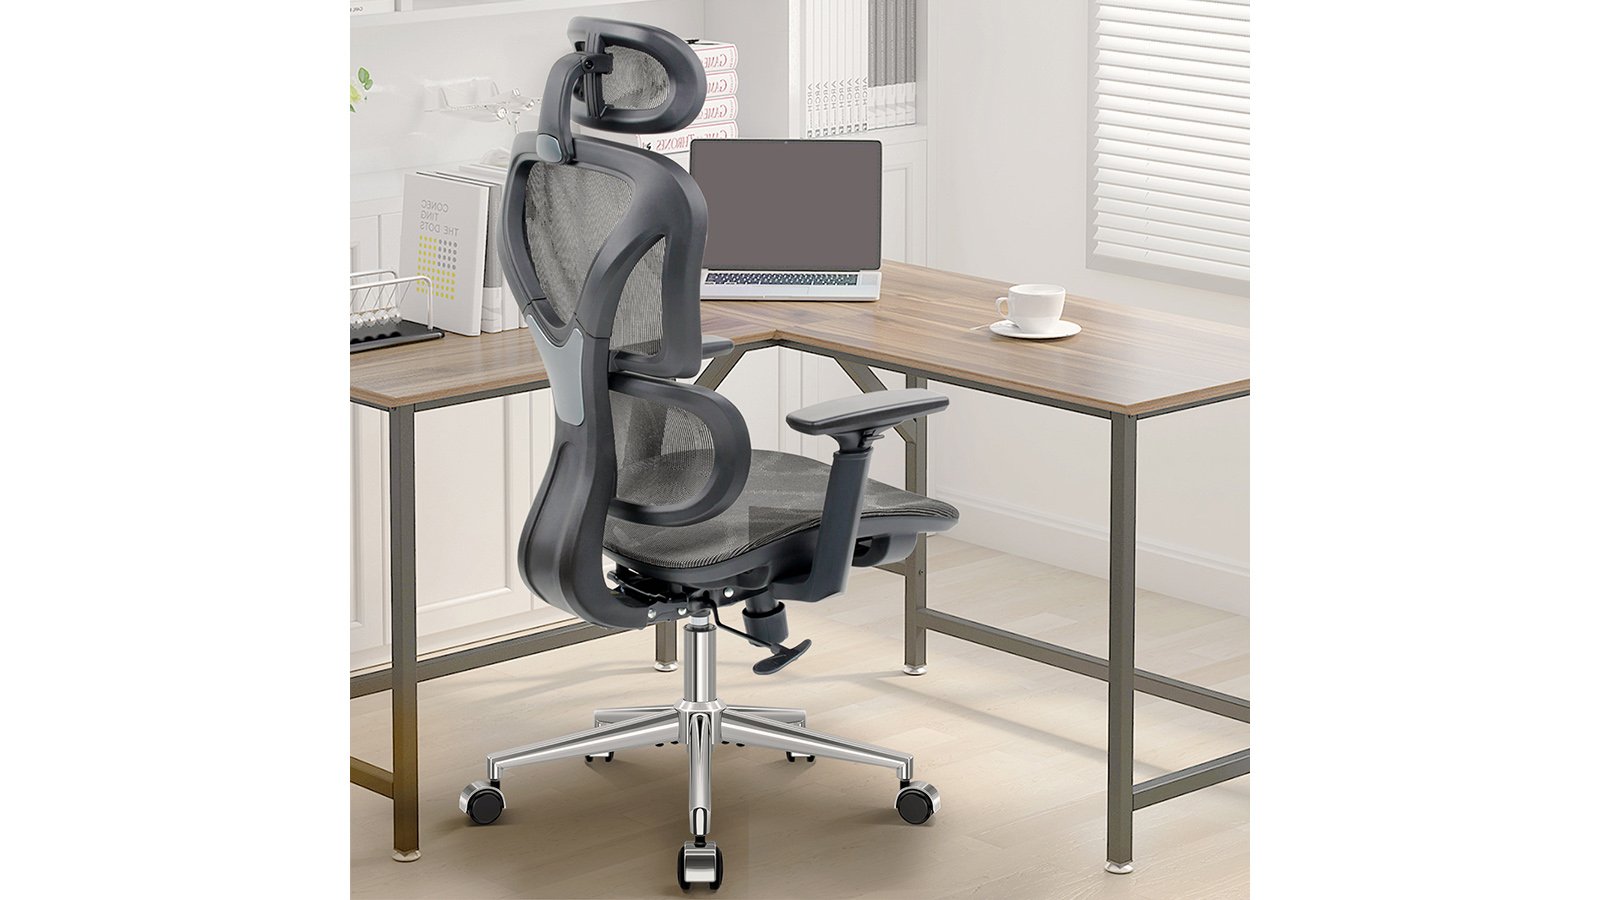 Ergonomic Chair: Lumbar Support